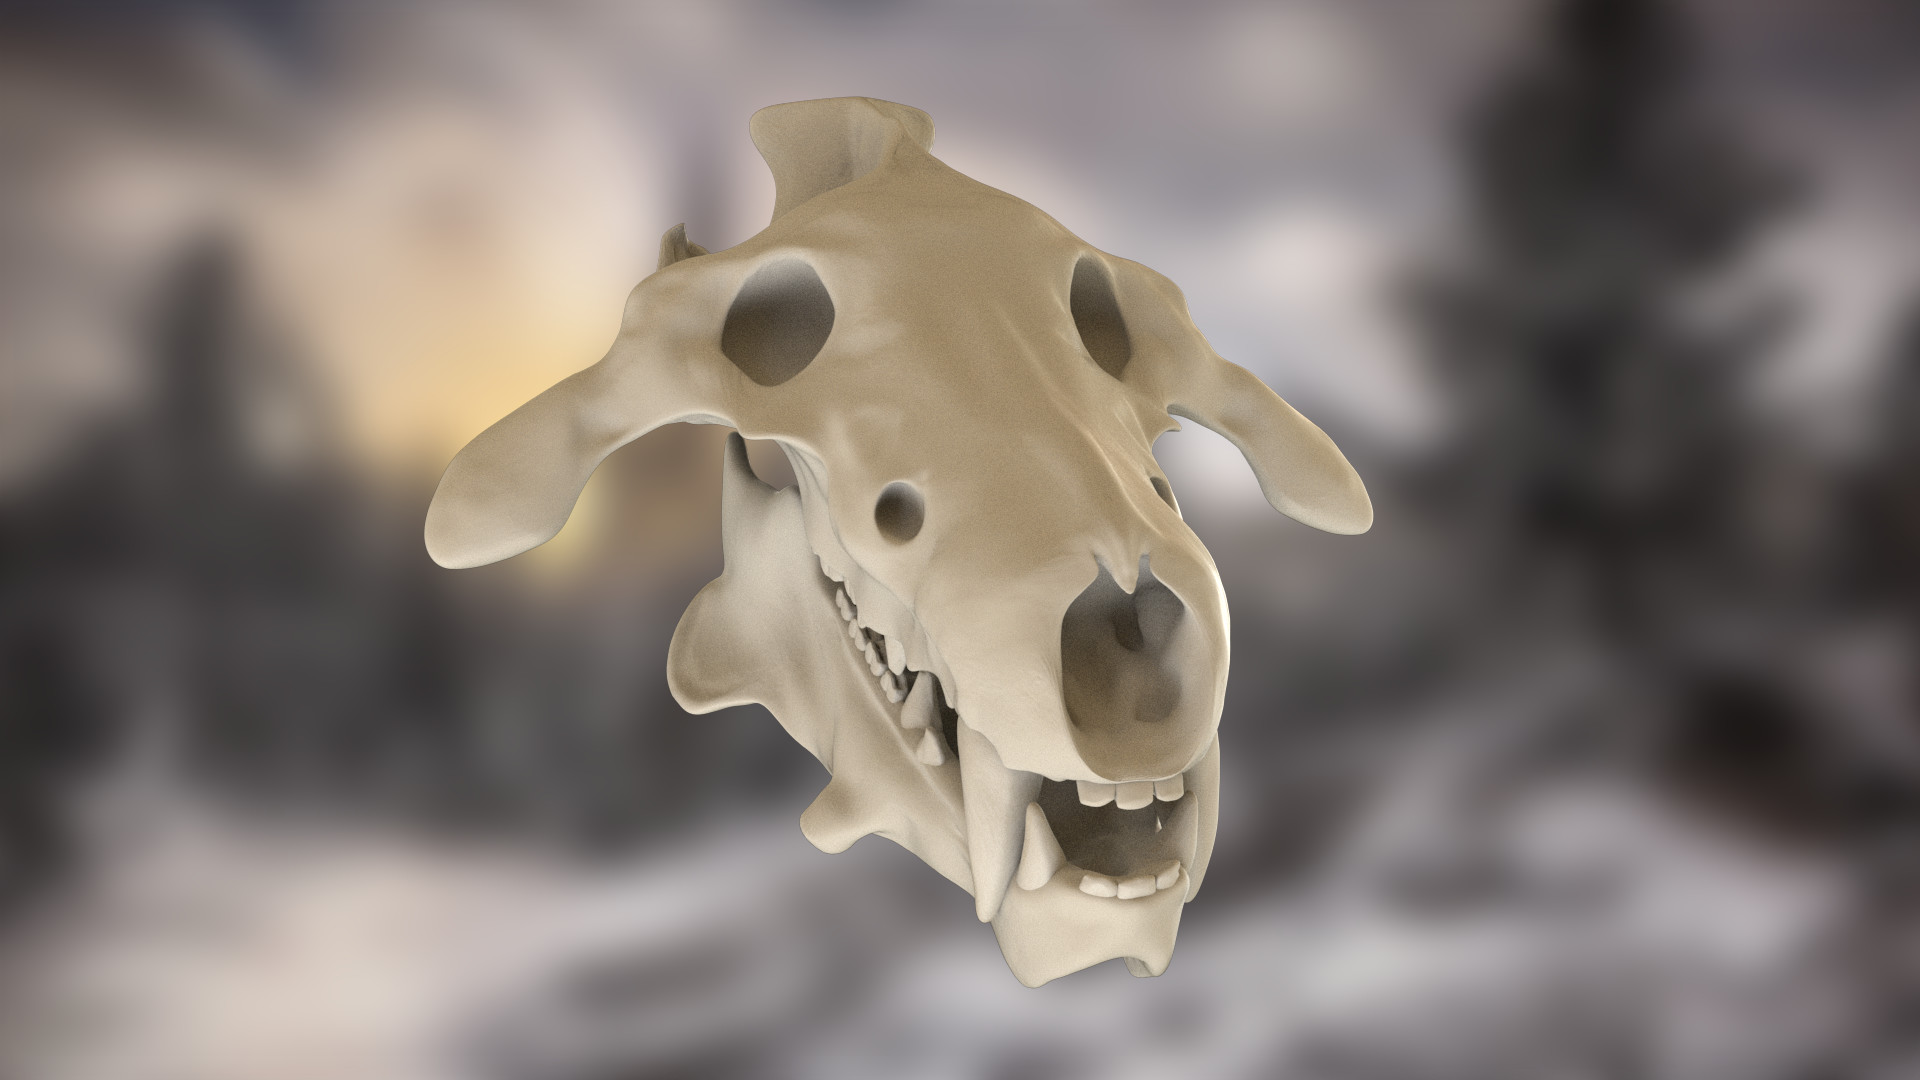 ArtStation - Daeodon Shoshonensis Skull, Miocene Epoch